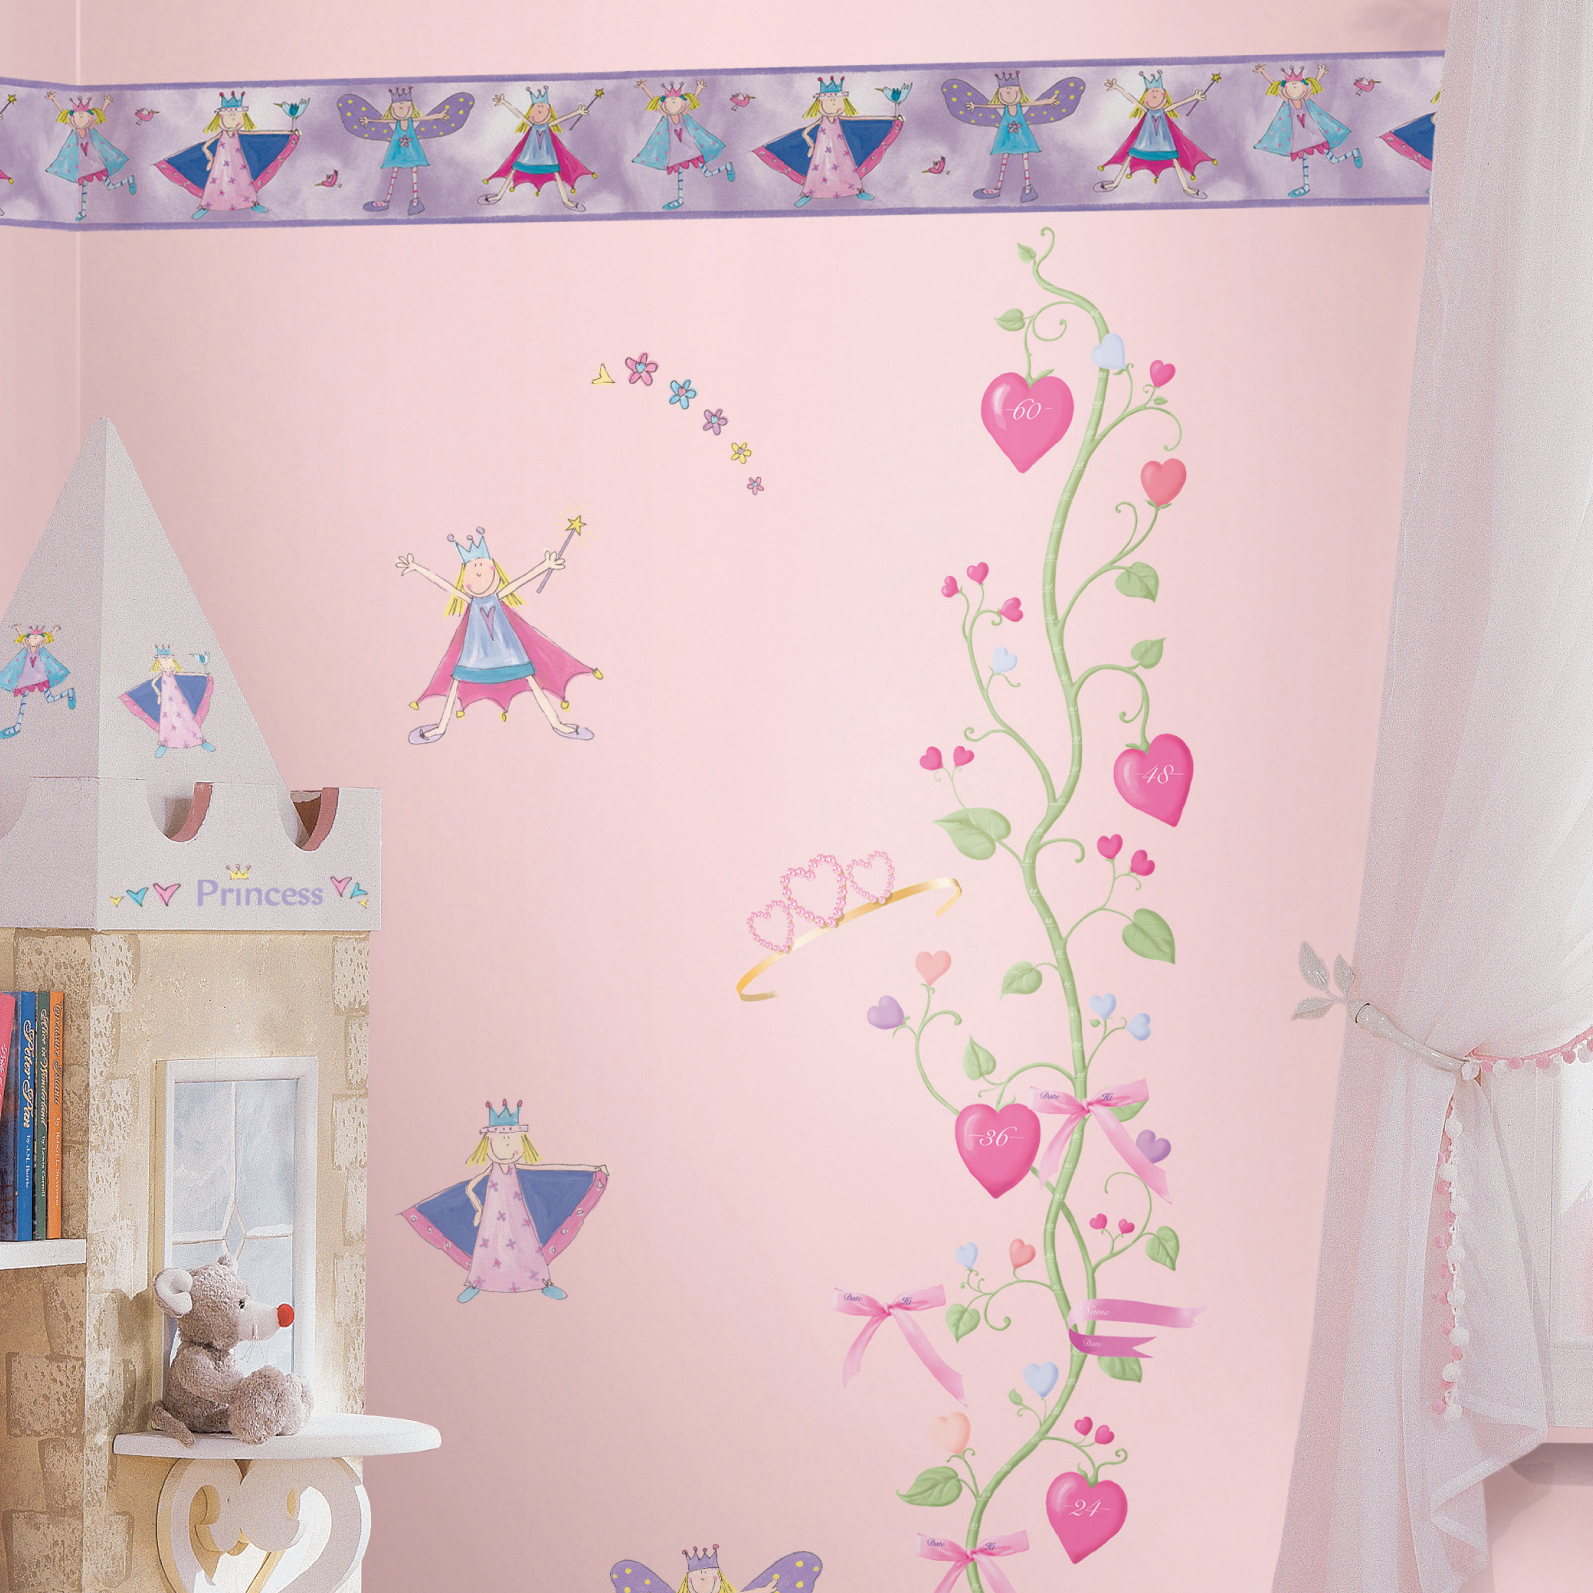 Fairy princess border - RoomMates for KiDS